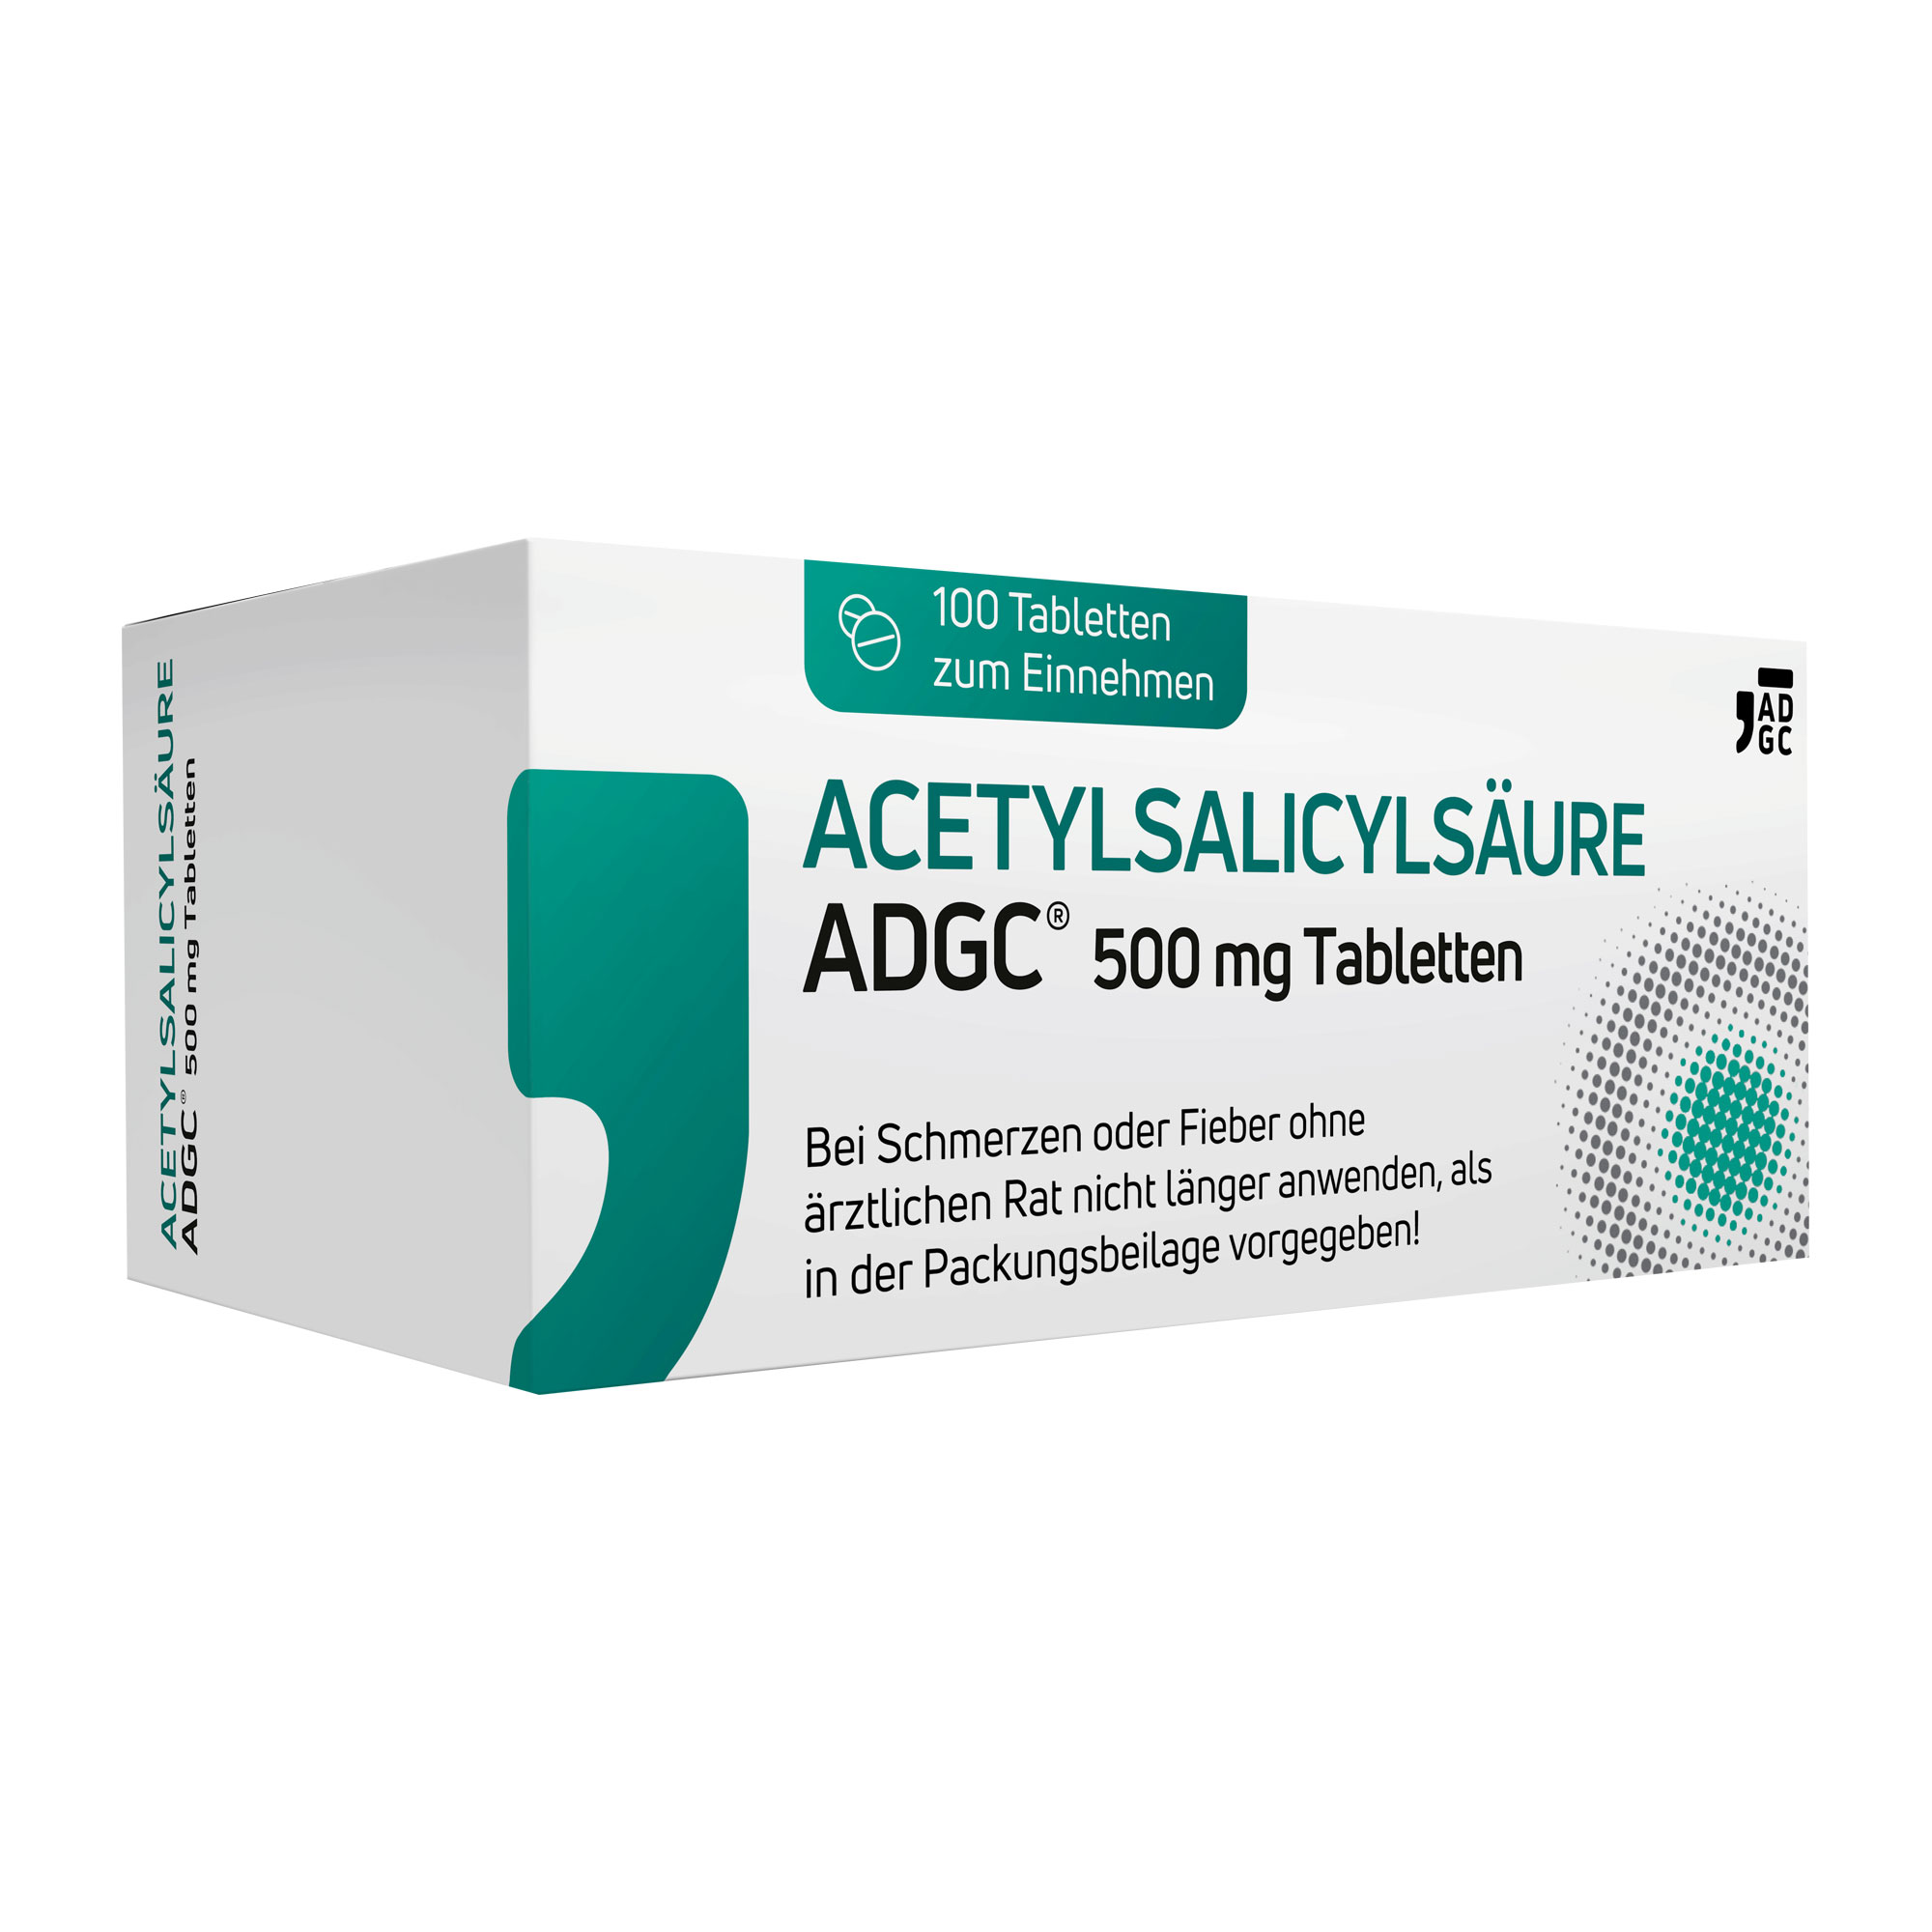 Acetylsalicylsäure ADGC 500 mg Tabletten